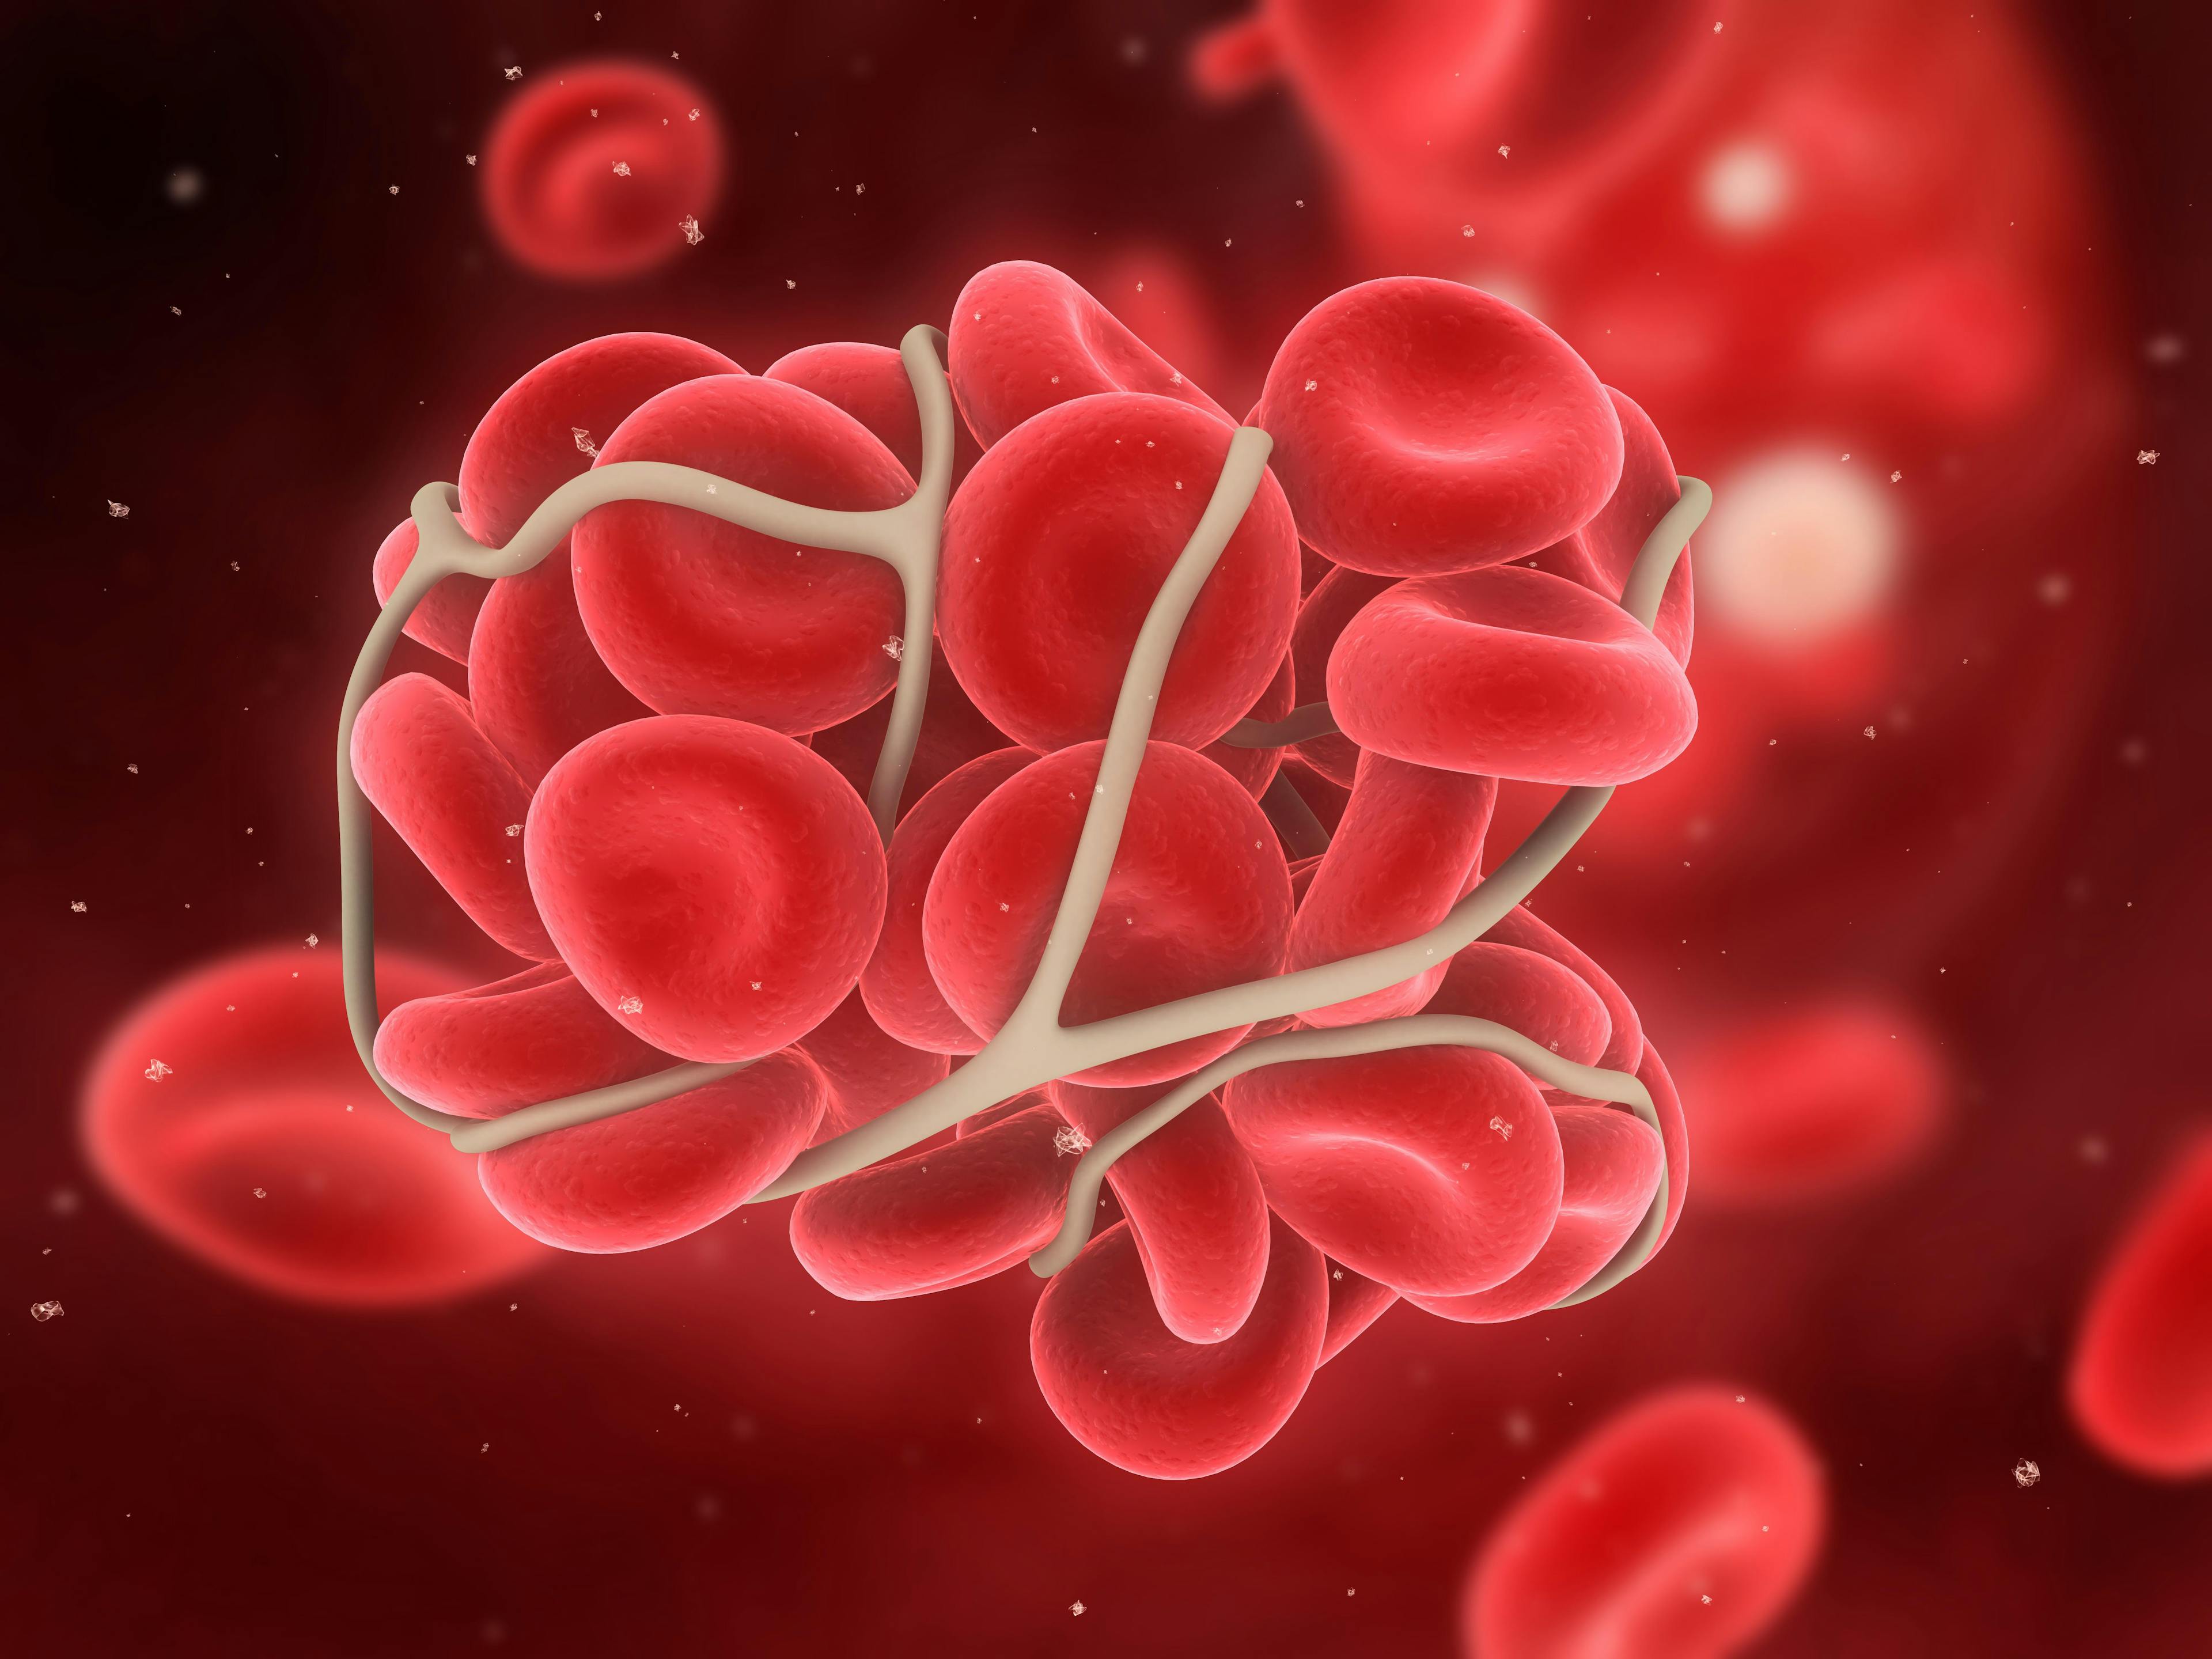 An illustration of a blood clot. 